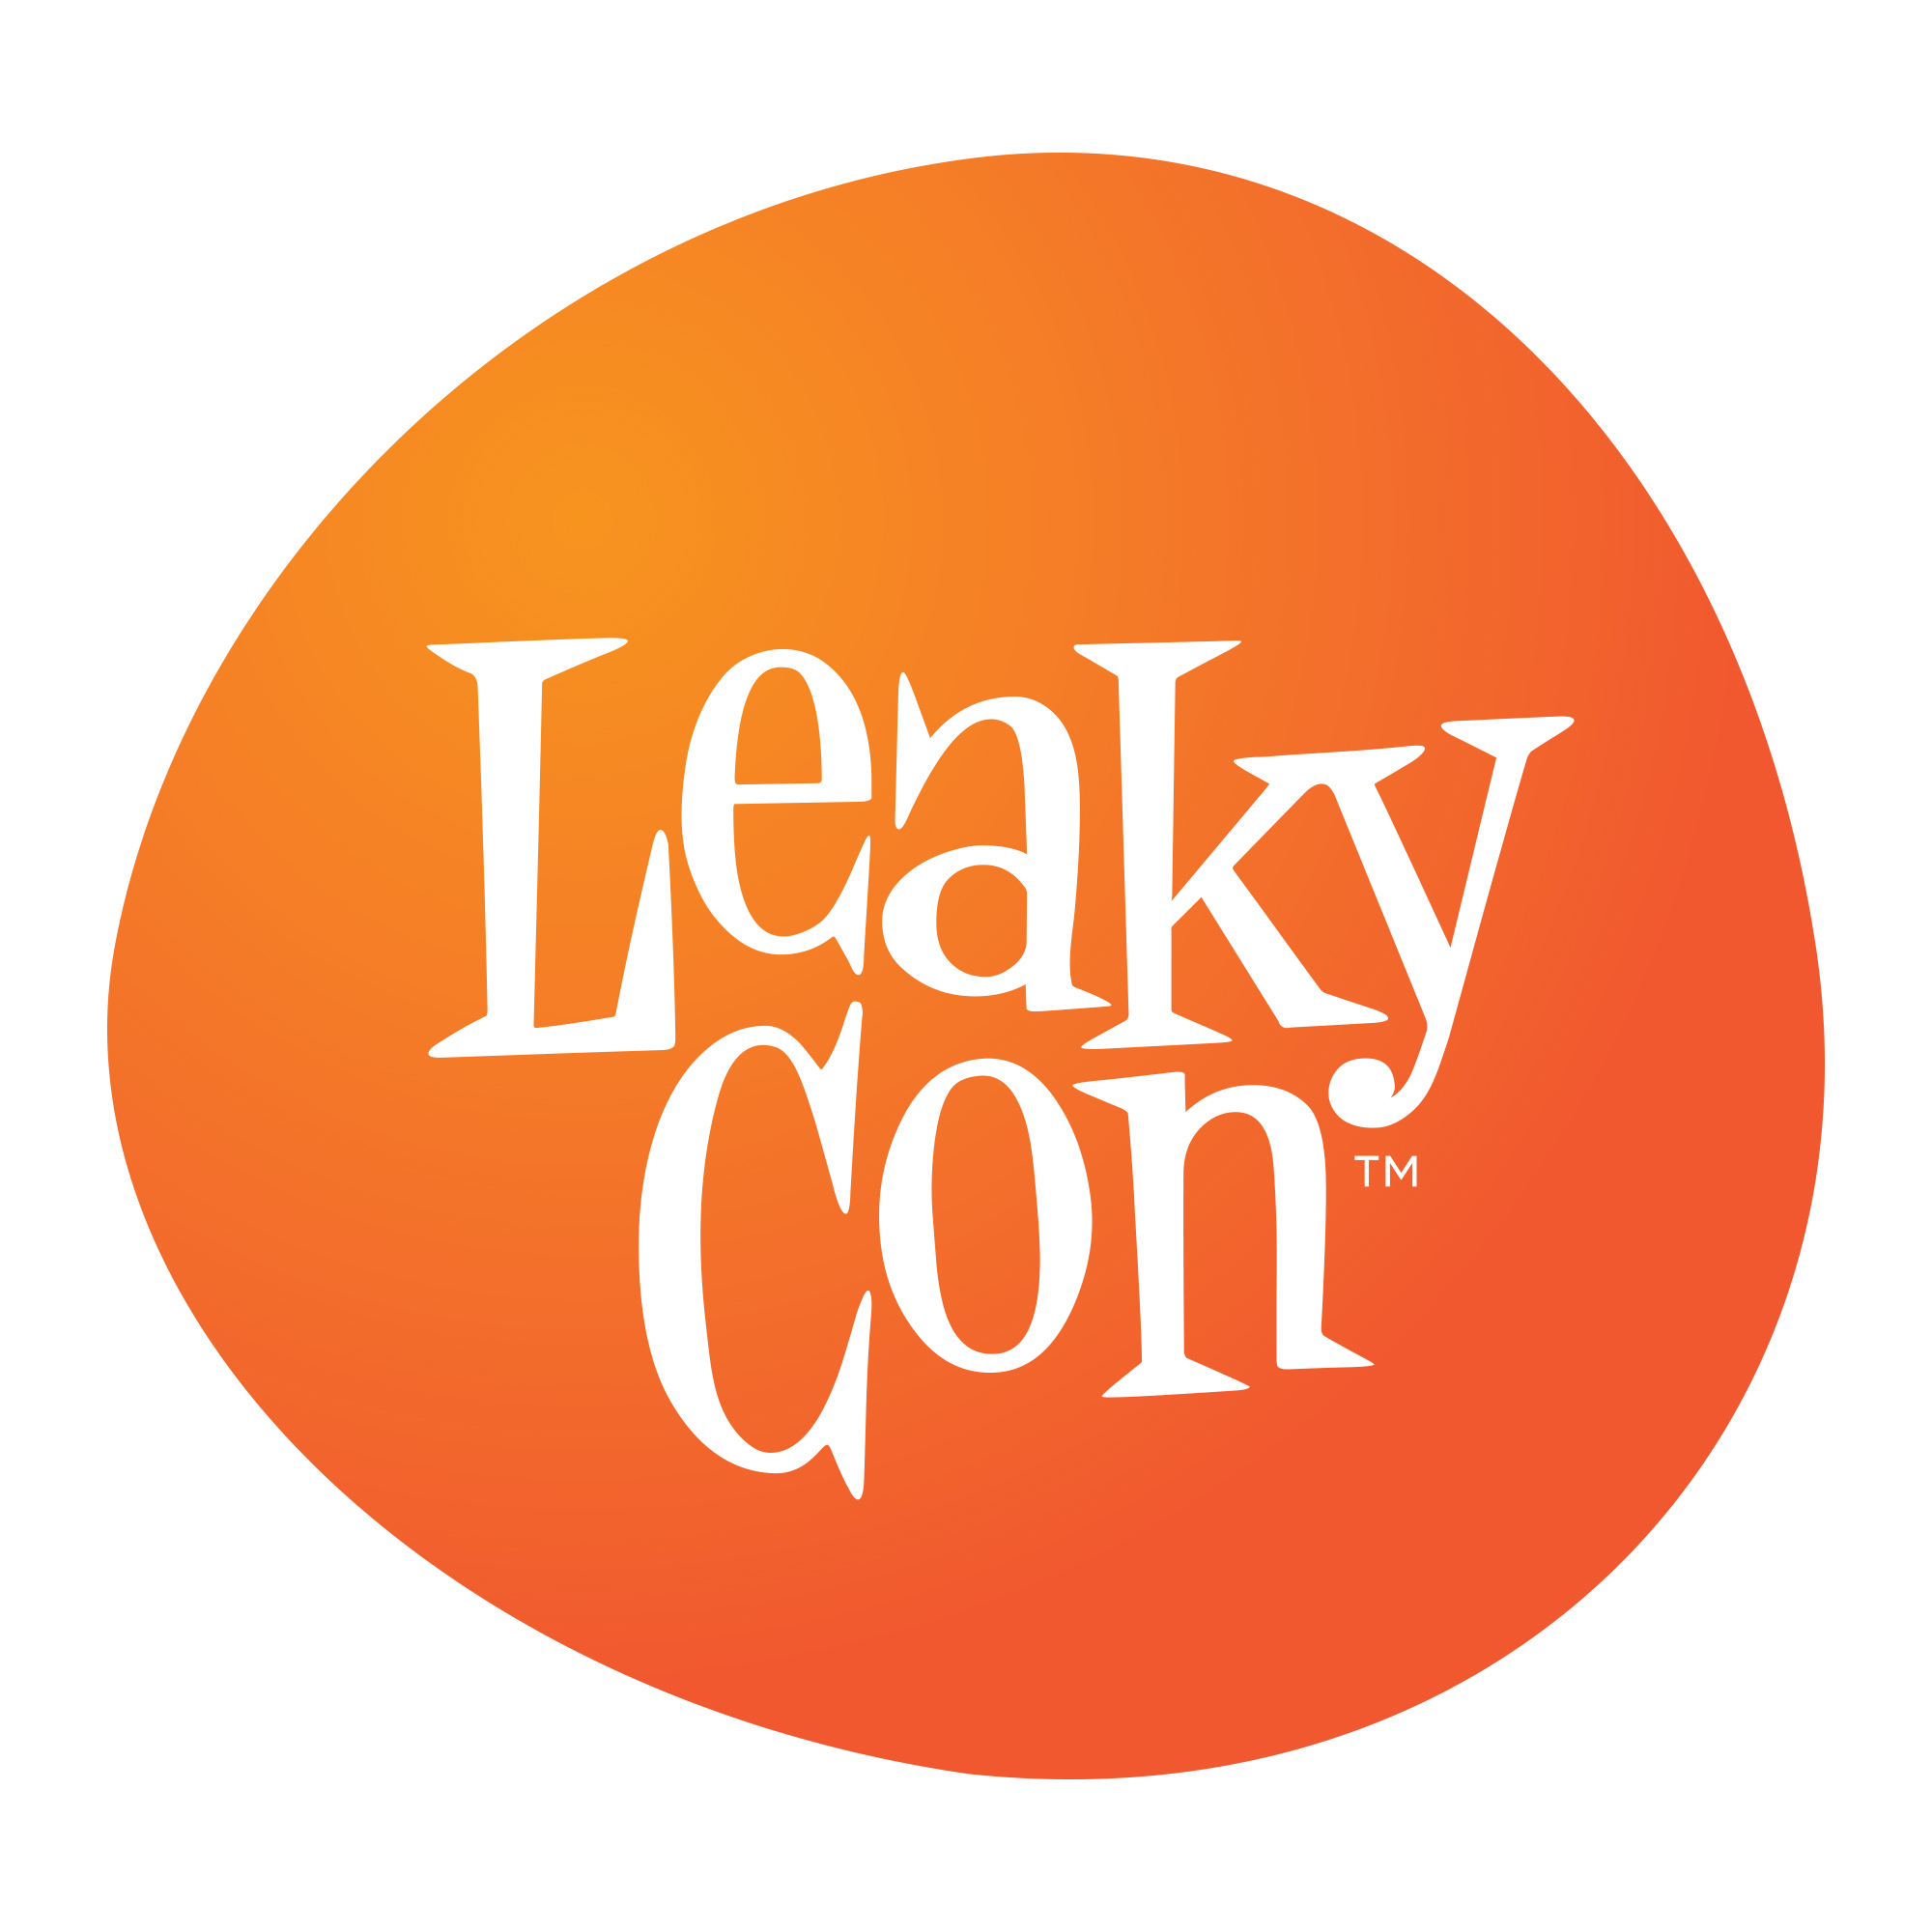 www.LeakyCon.com